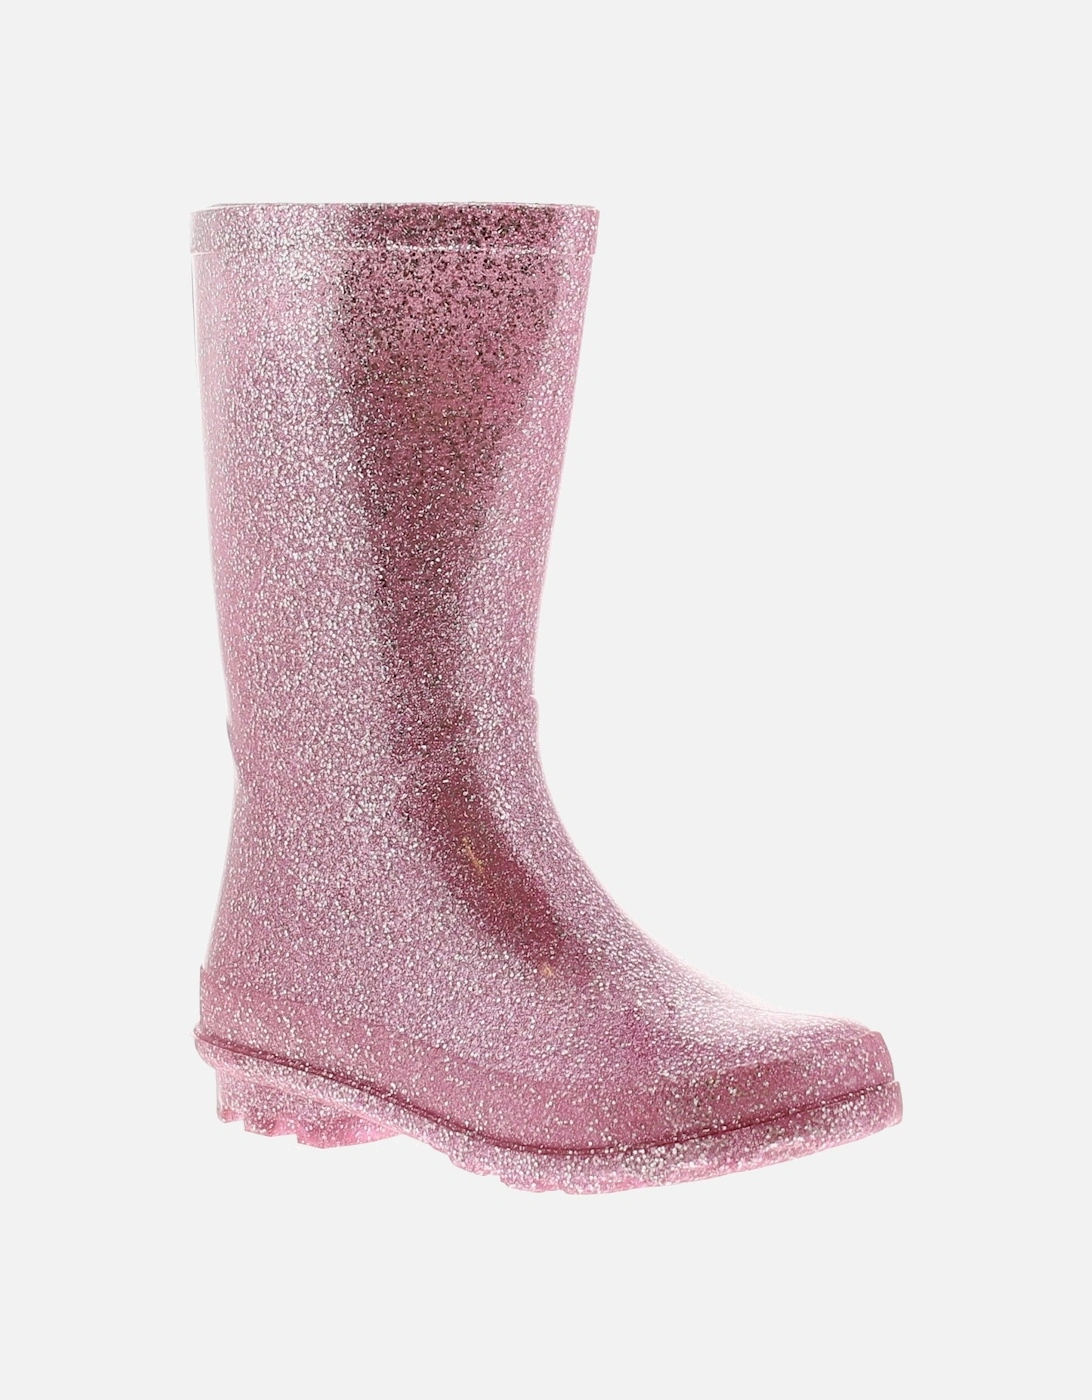 Girls Wellies Junior Glitzy Slip On pink UK Size, 6 of 5